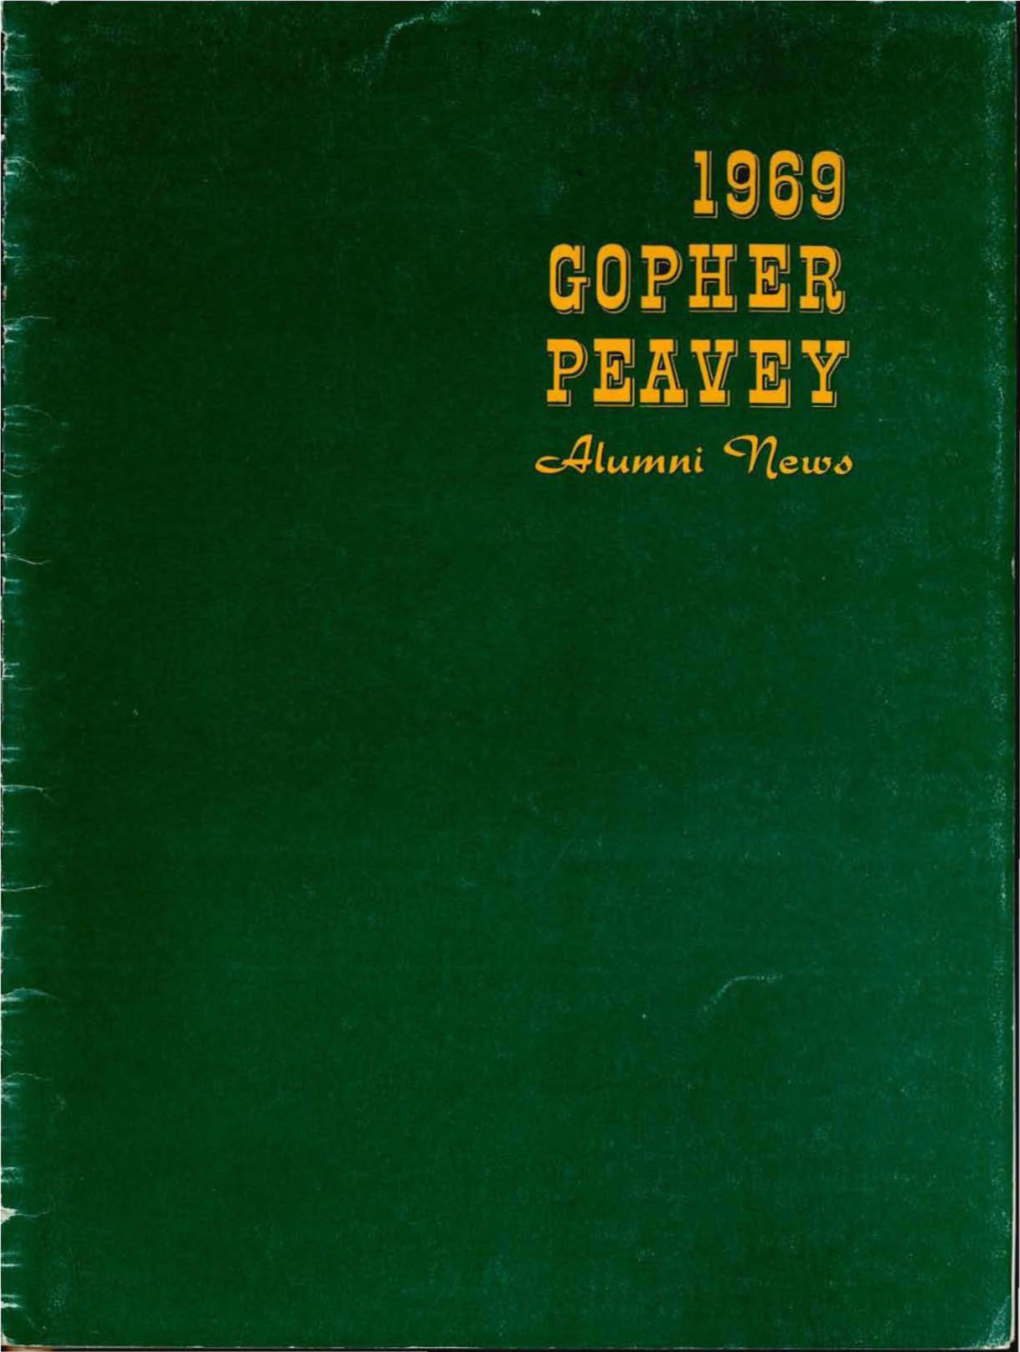 Gopher Peavey 1969